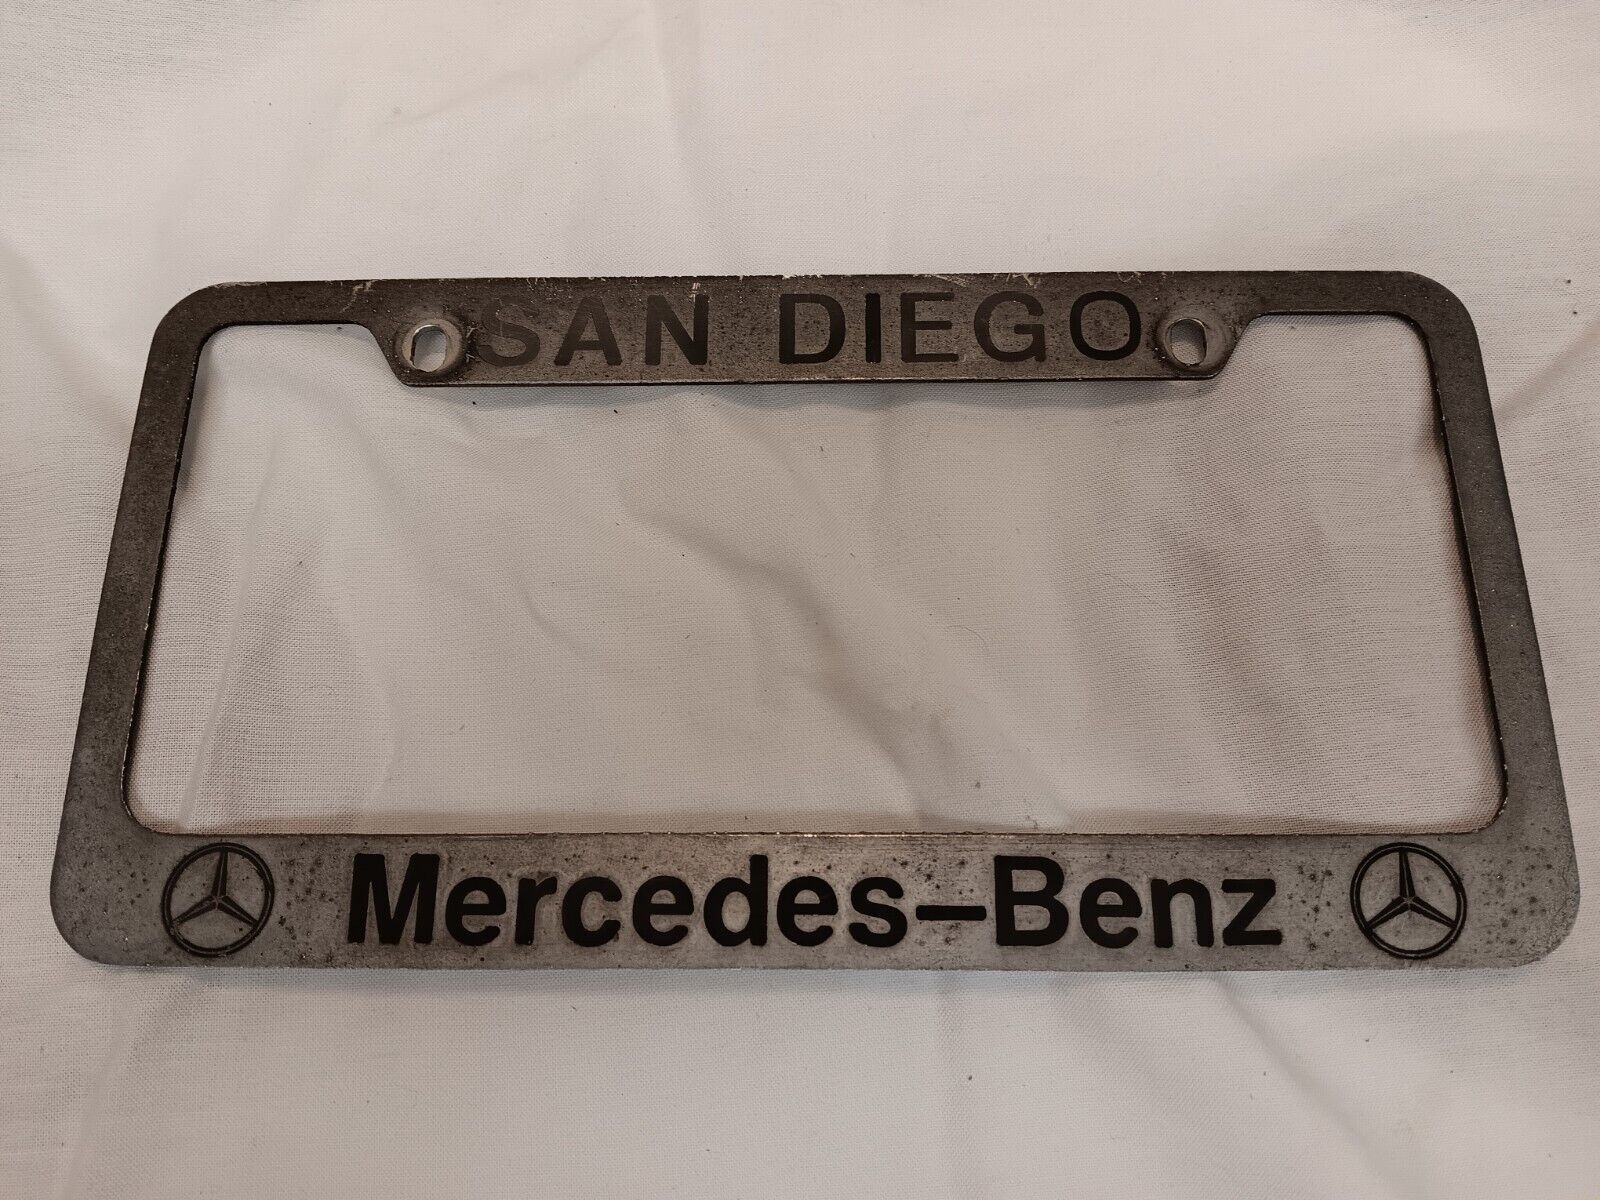 Mercedes-Benz of San Diego, California Car Dealer Metal License Plate Frame